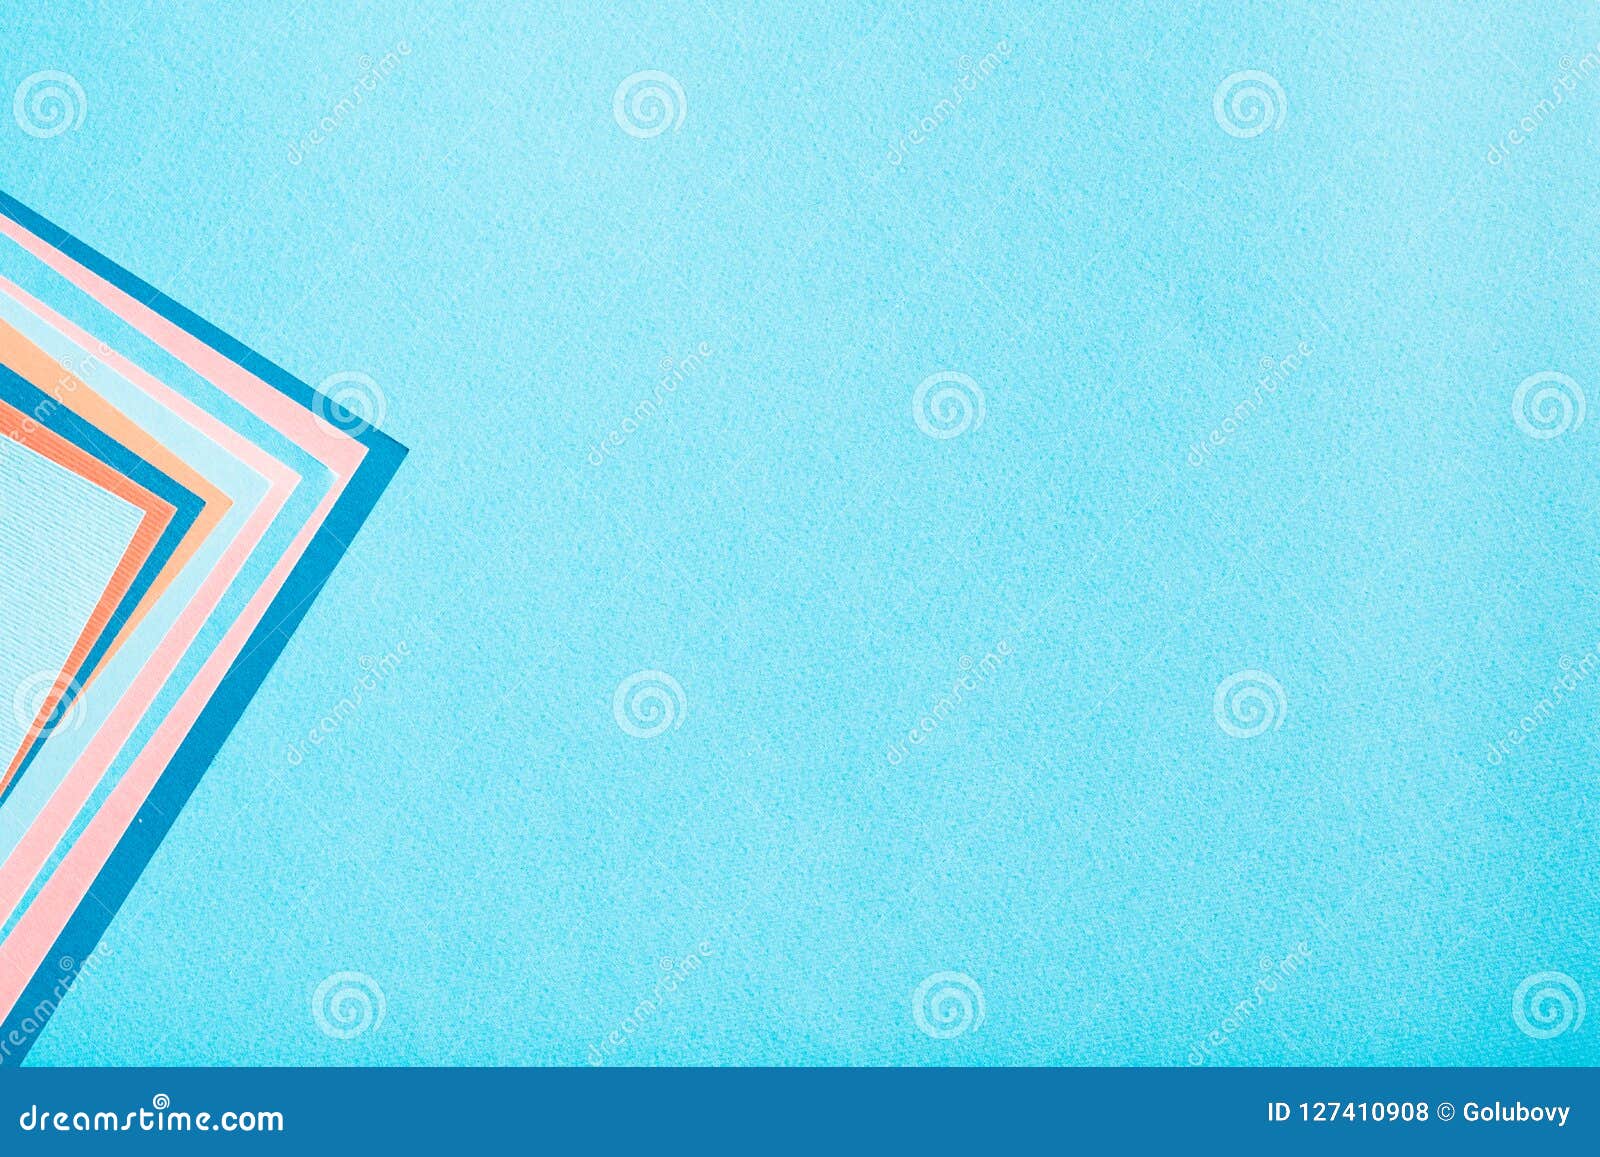 Construction Paper Texture Background Blue Accent Stock Photo